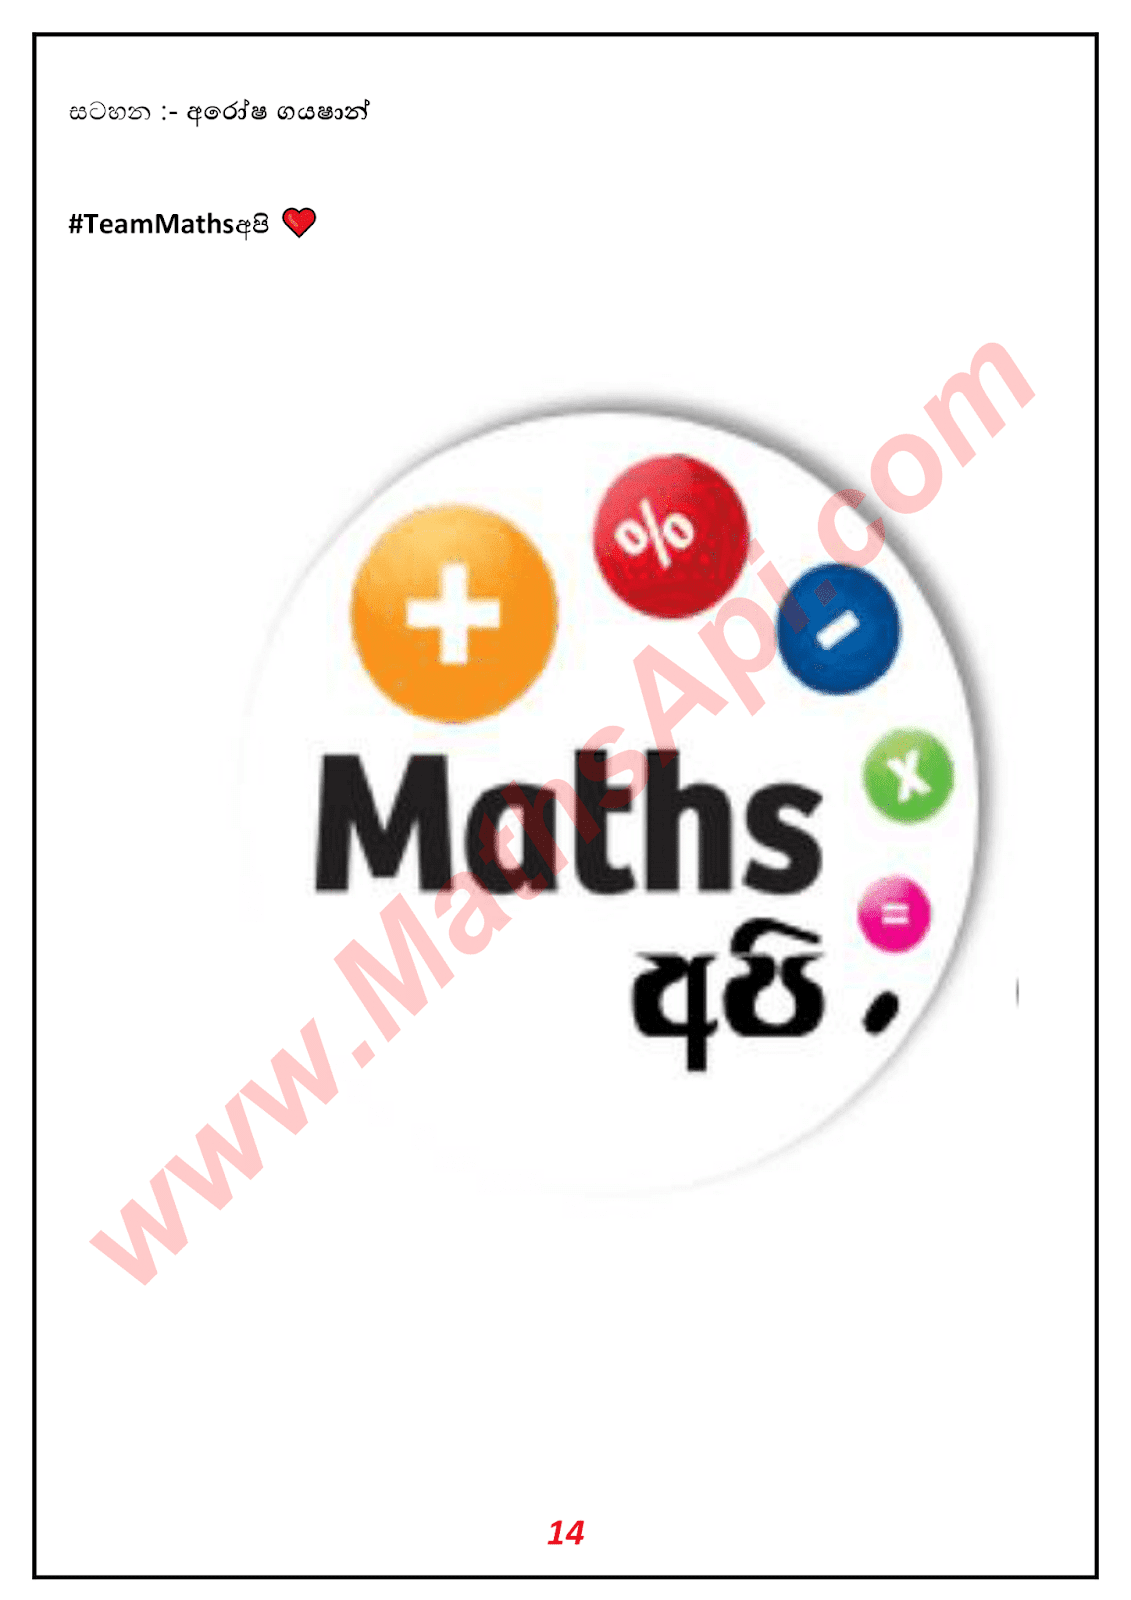 what-is-kdu-mathsapi-largest-online-mathematic-educational-website